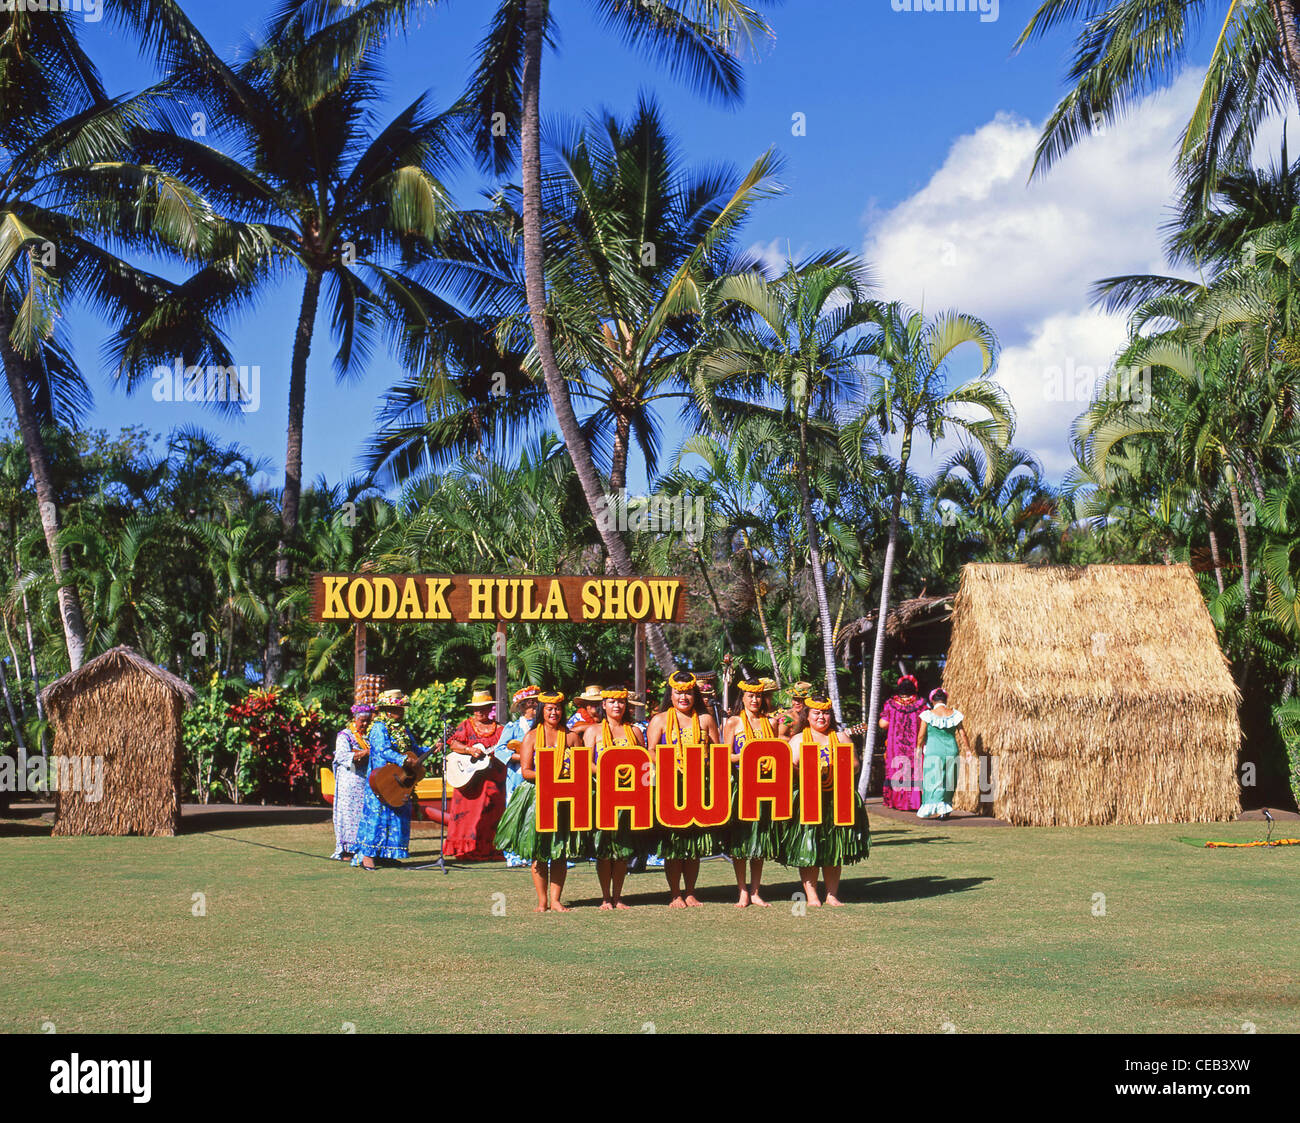 Hawaiian dancers, Kodak Hula Show, Honolulu, Oahu, Hawaii, United States of America Stock Photo